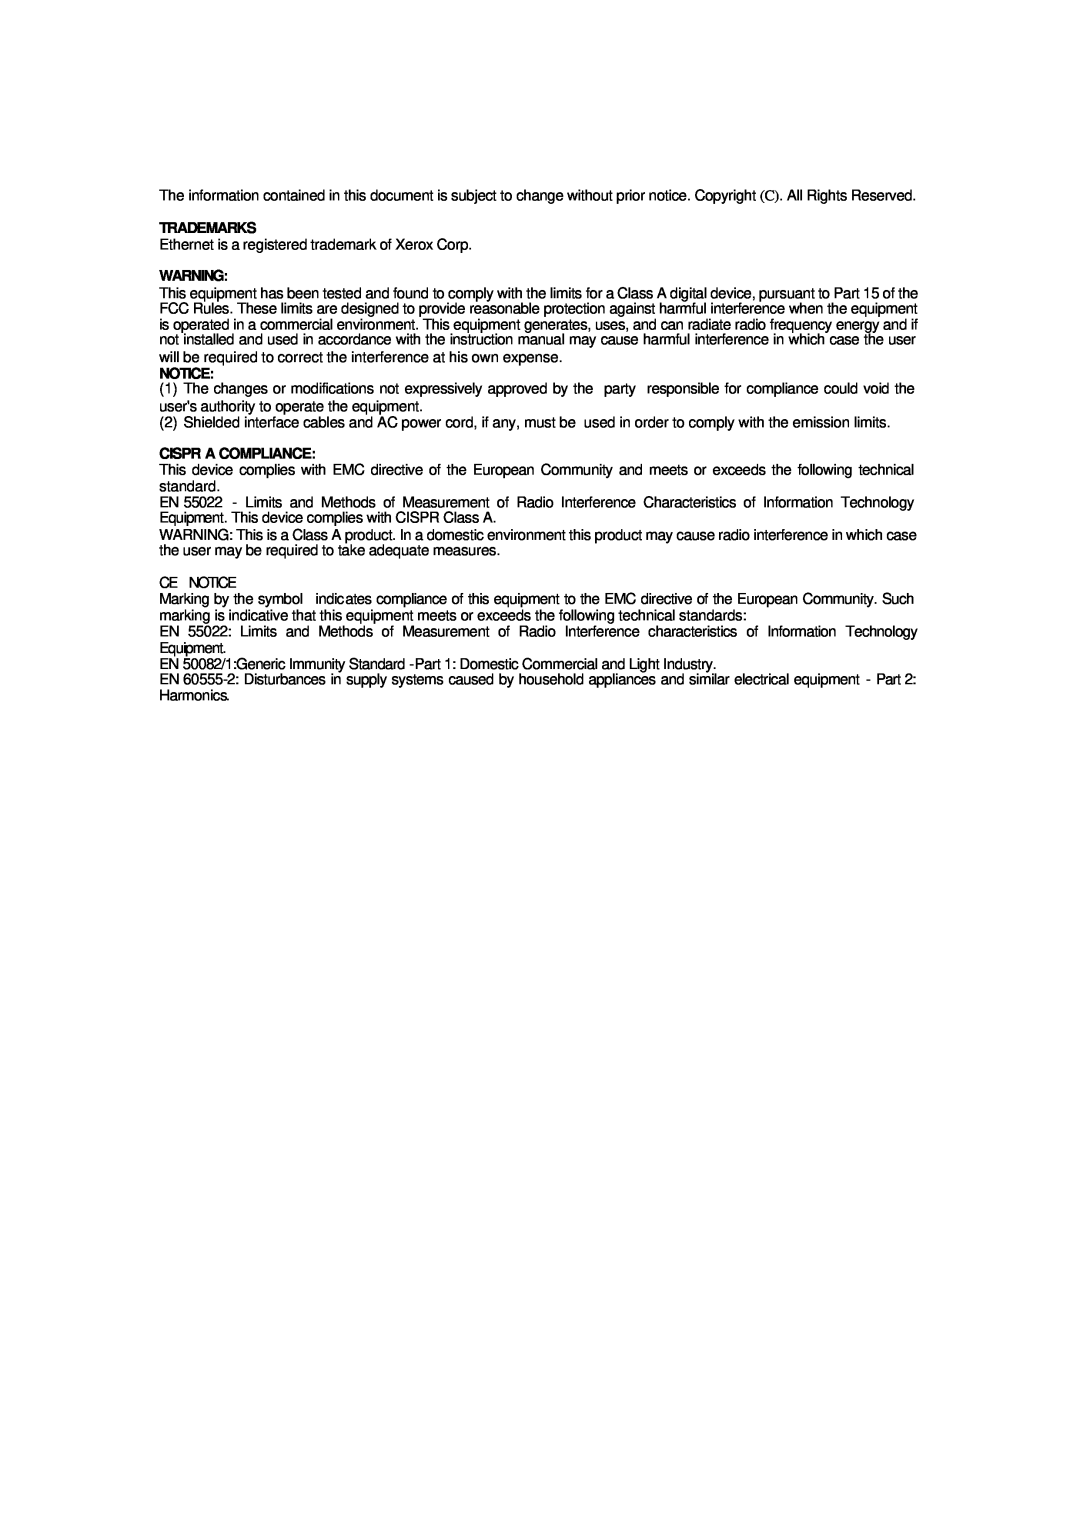 Xerox NS-2260 operation manual Trademarks, Notice, Cispr A Compliance 